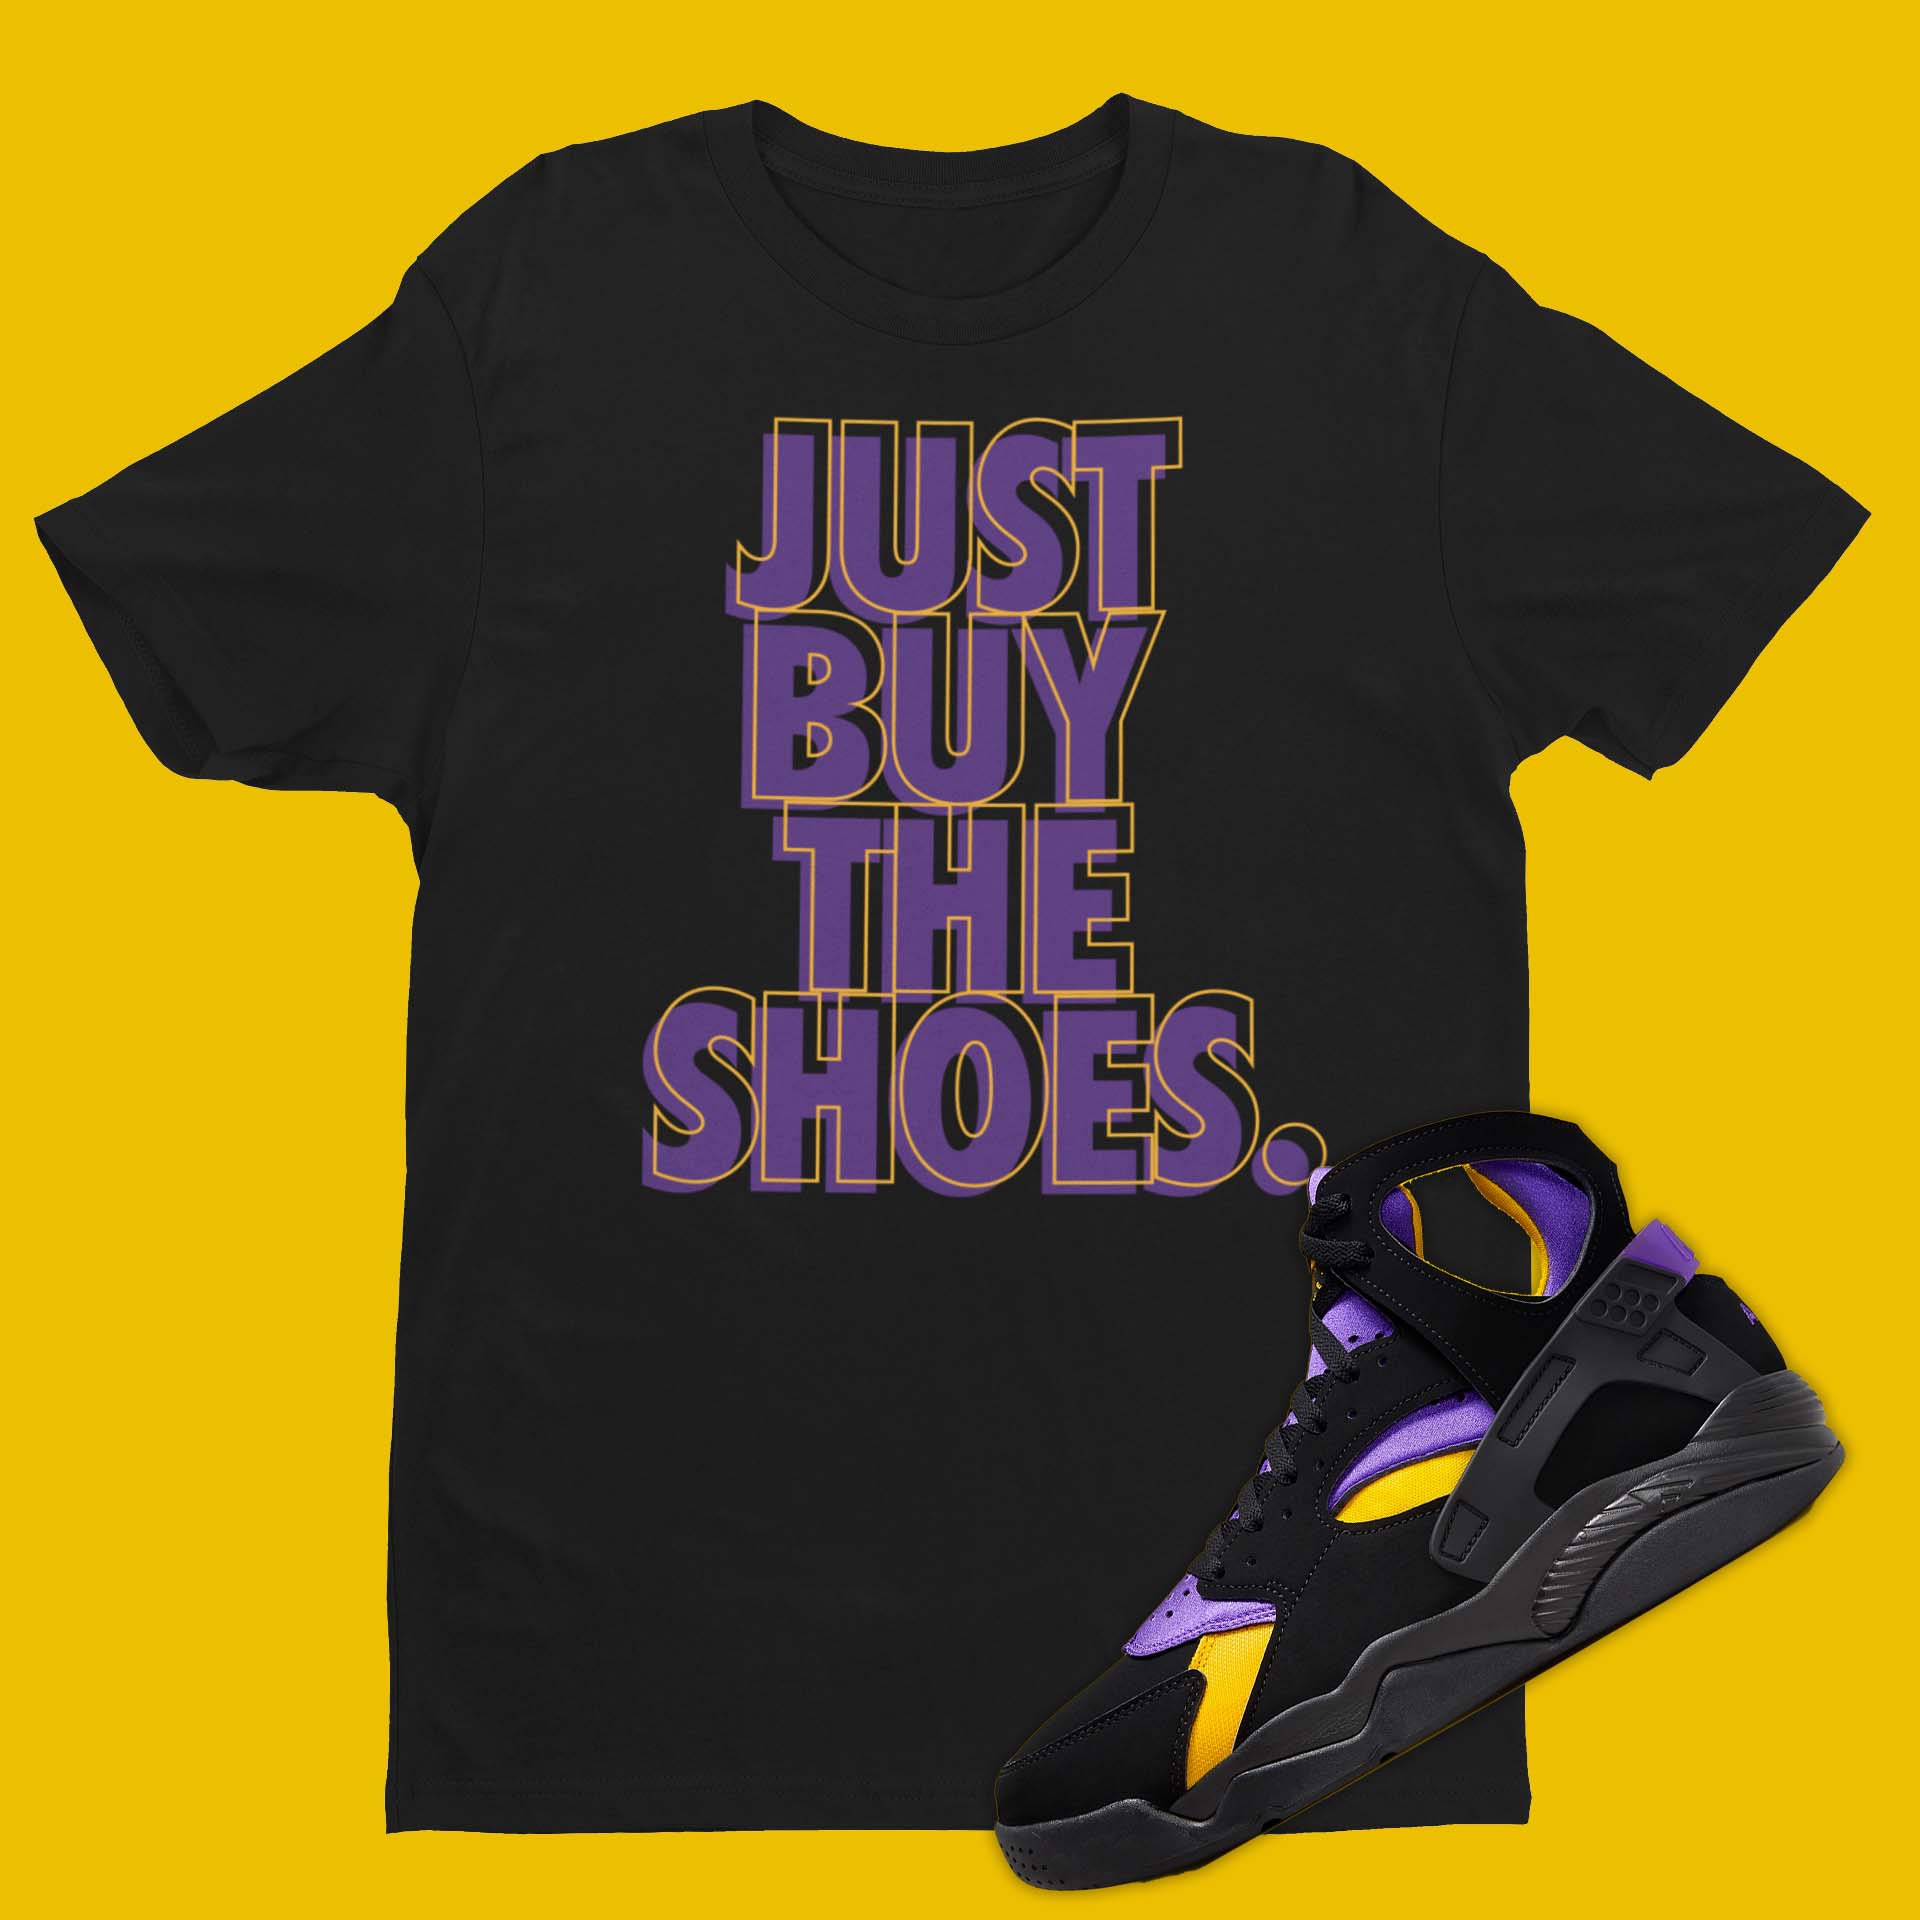 Nike Air Flight Huarache Lakers Away | Buy The Shoes T-Shirt | SNKADX ...